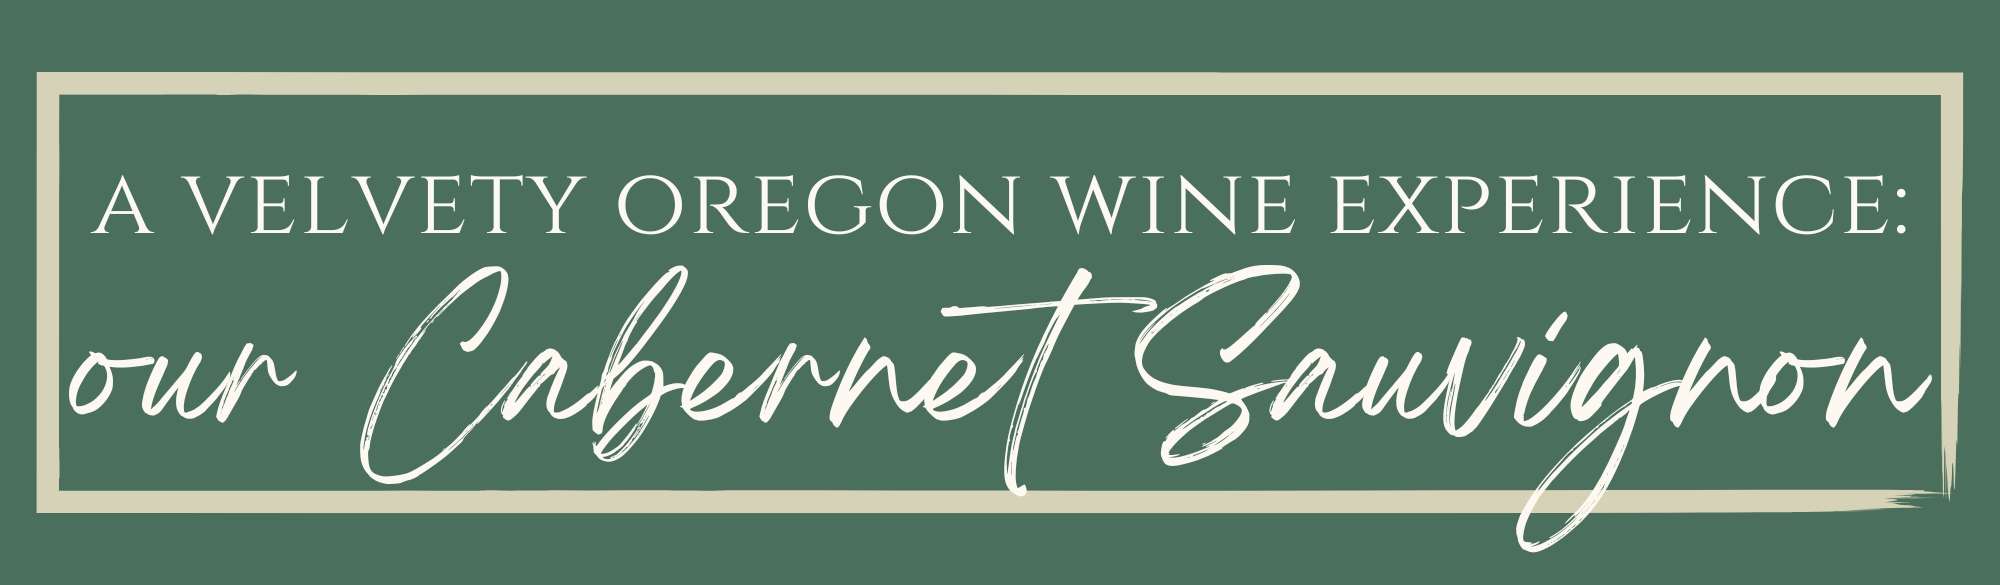 Oregon Cabernet Sauvignon is a velvety wine experience! 